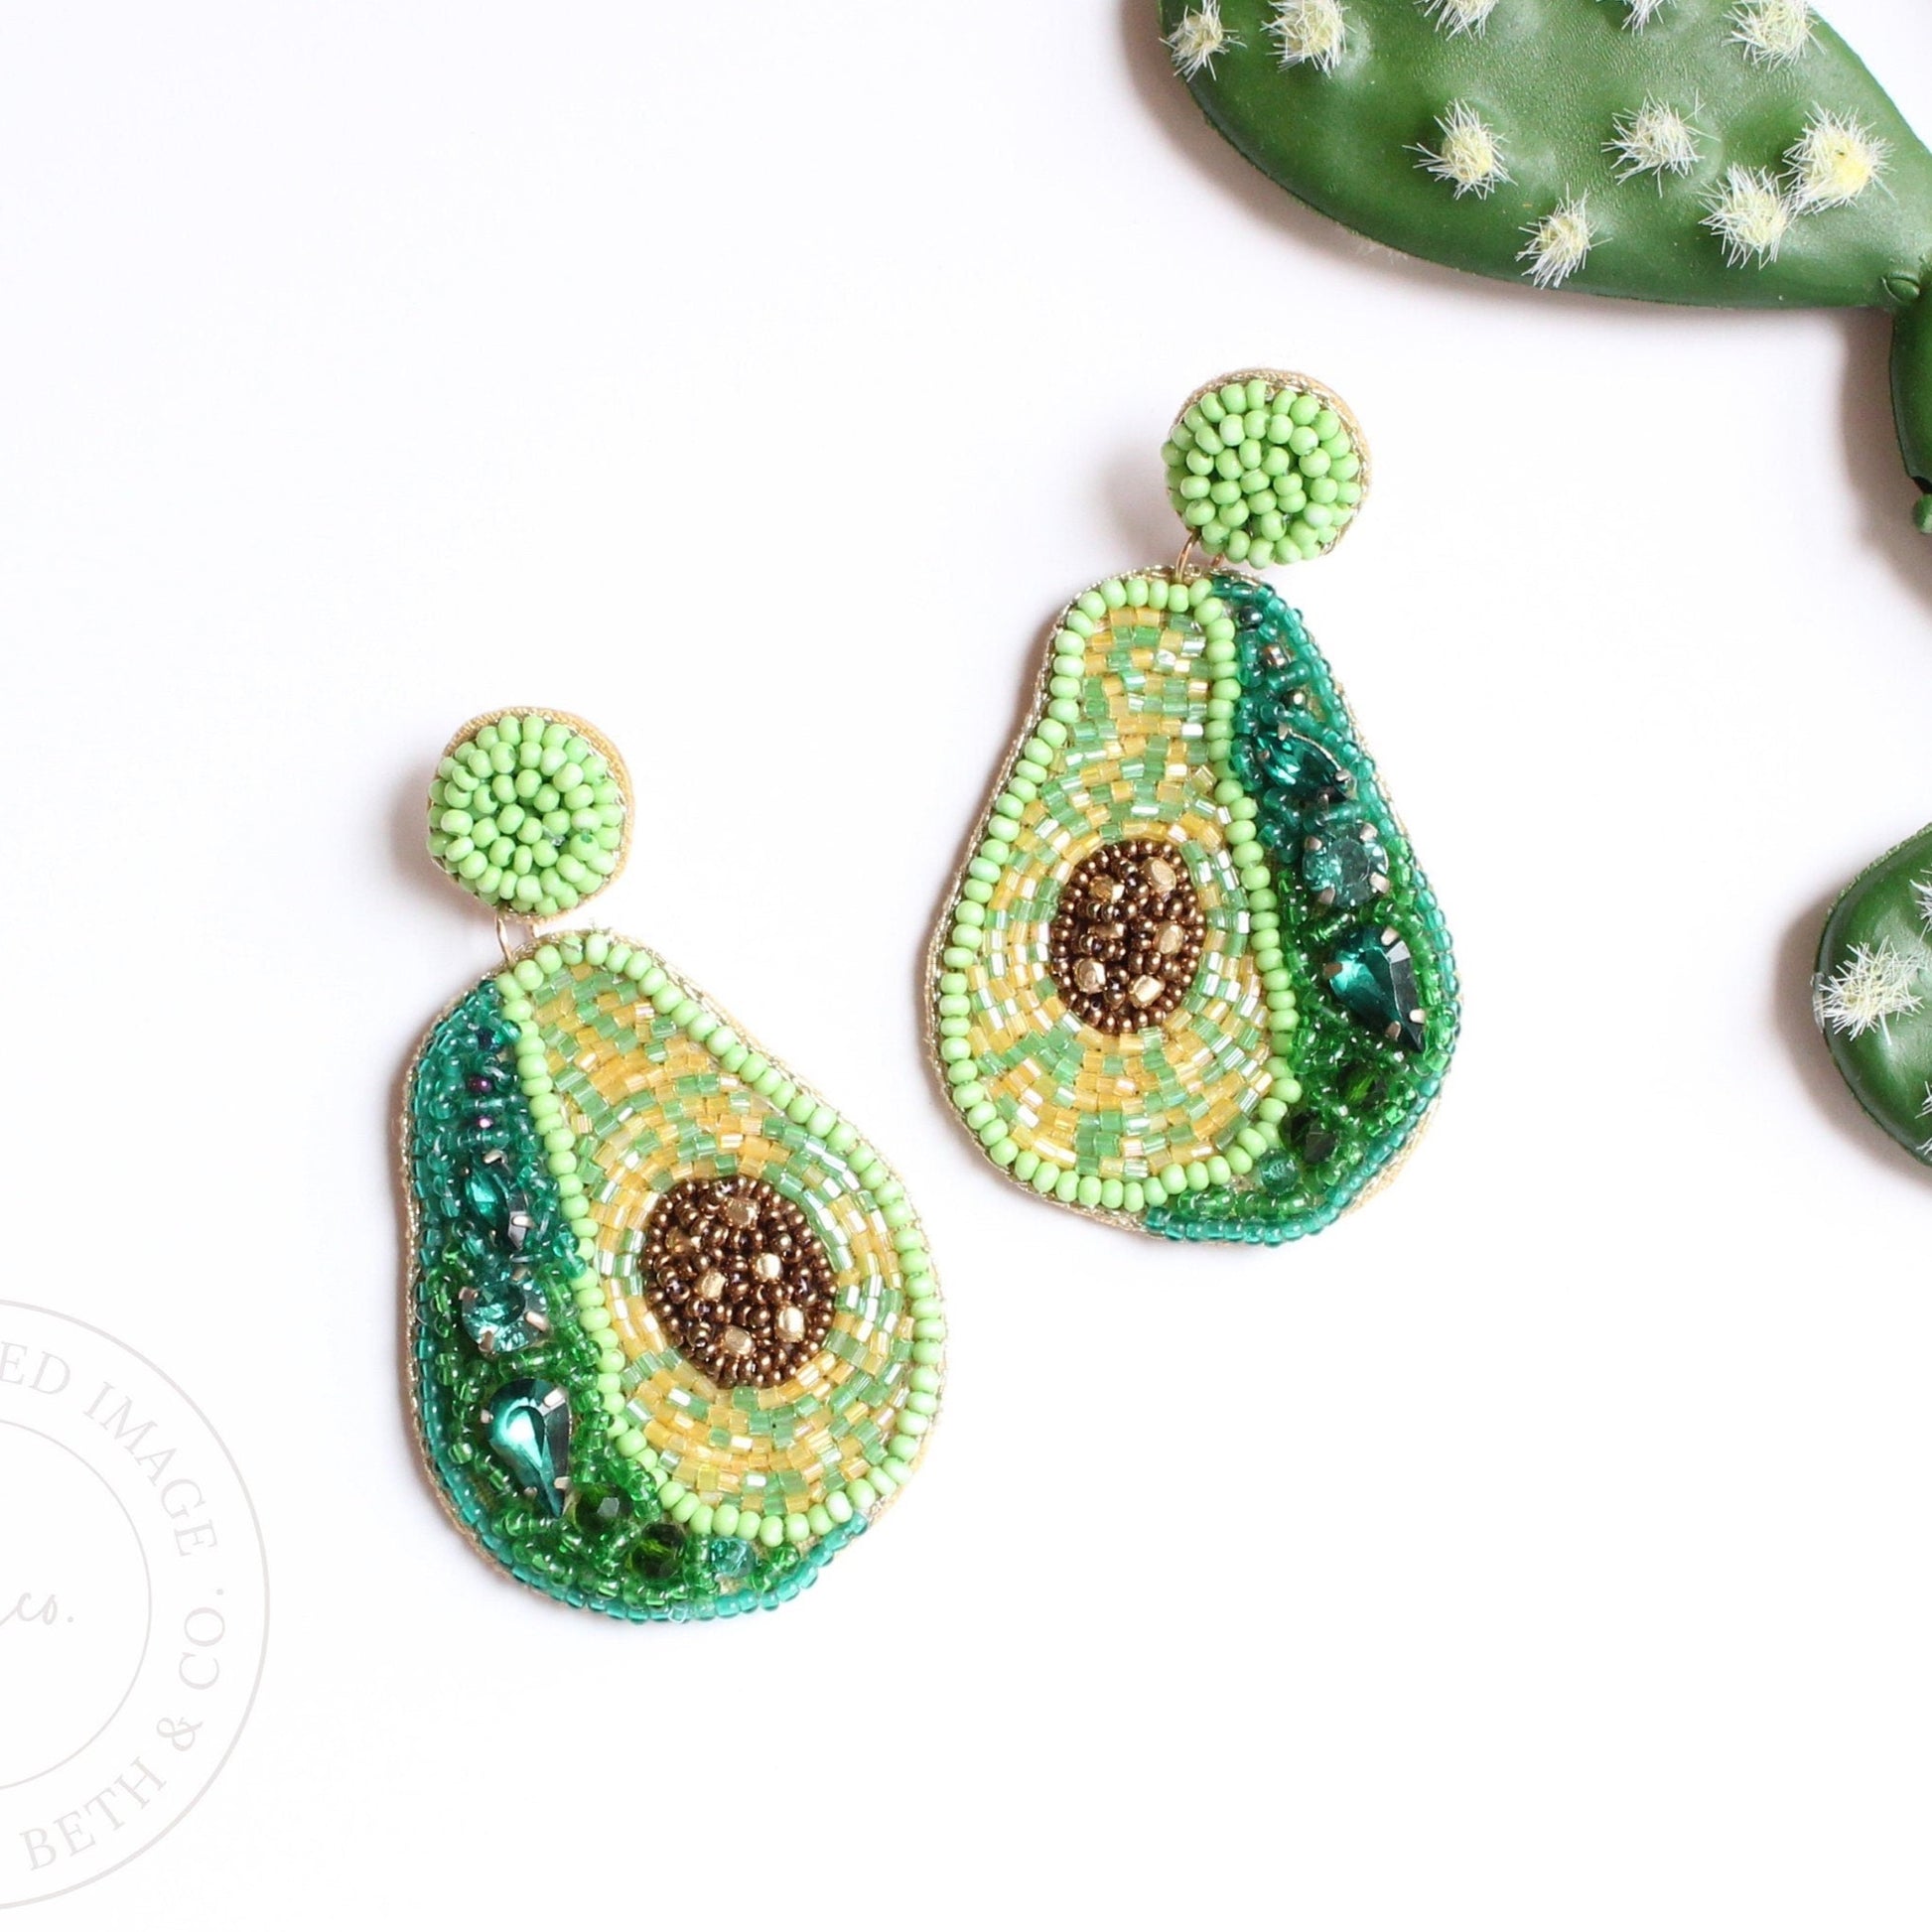 green avocado beaded earrings on white table next to cactus